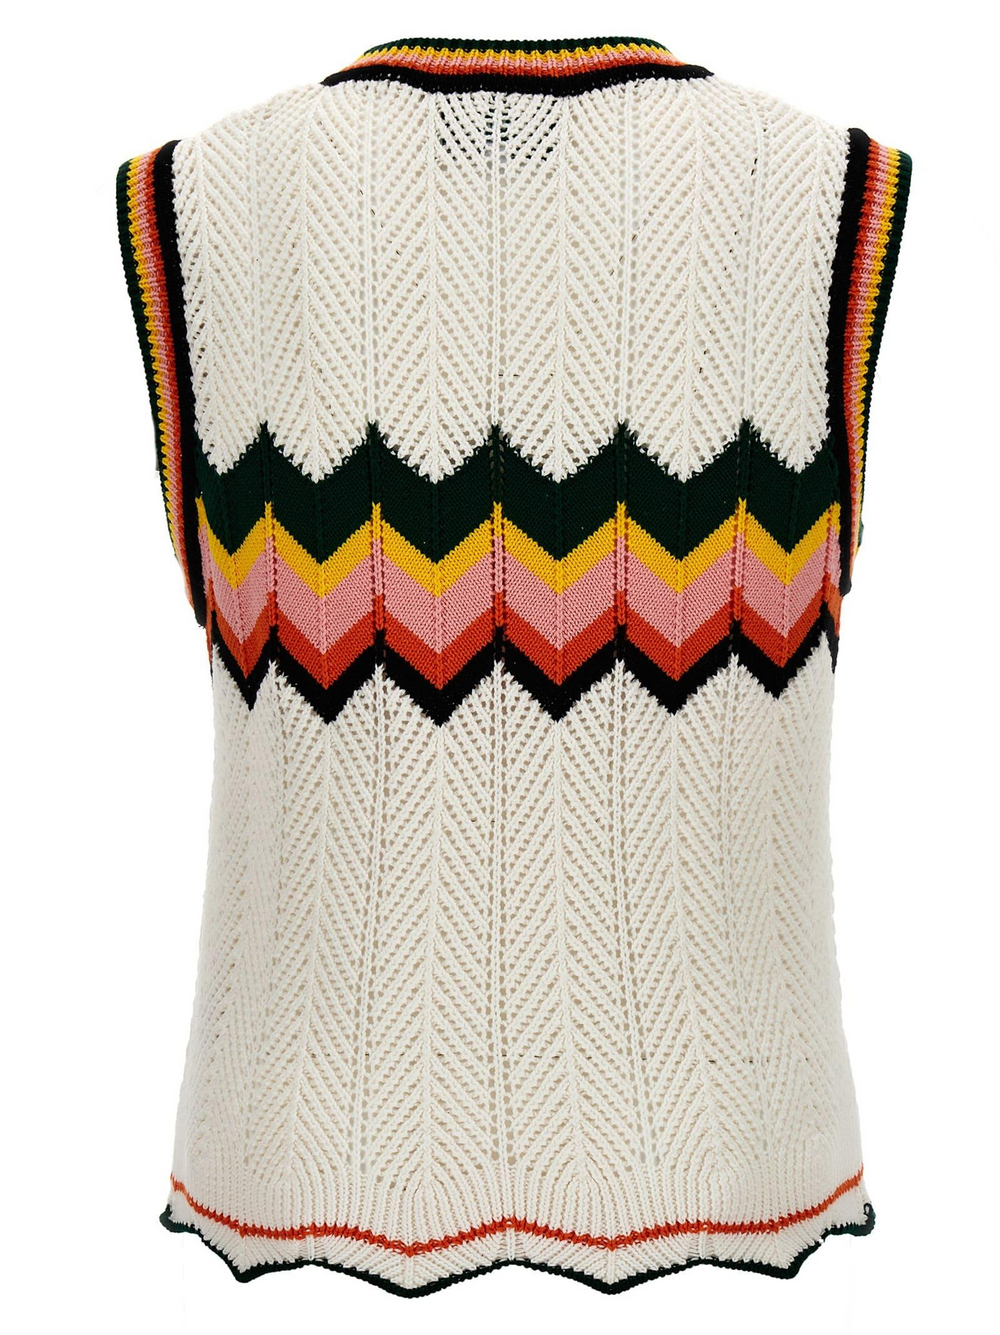 Casablanca 'Chevron' Knit Vest